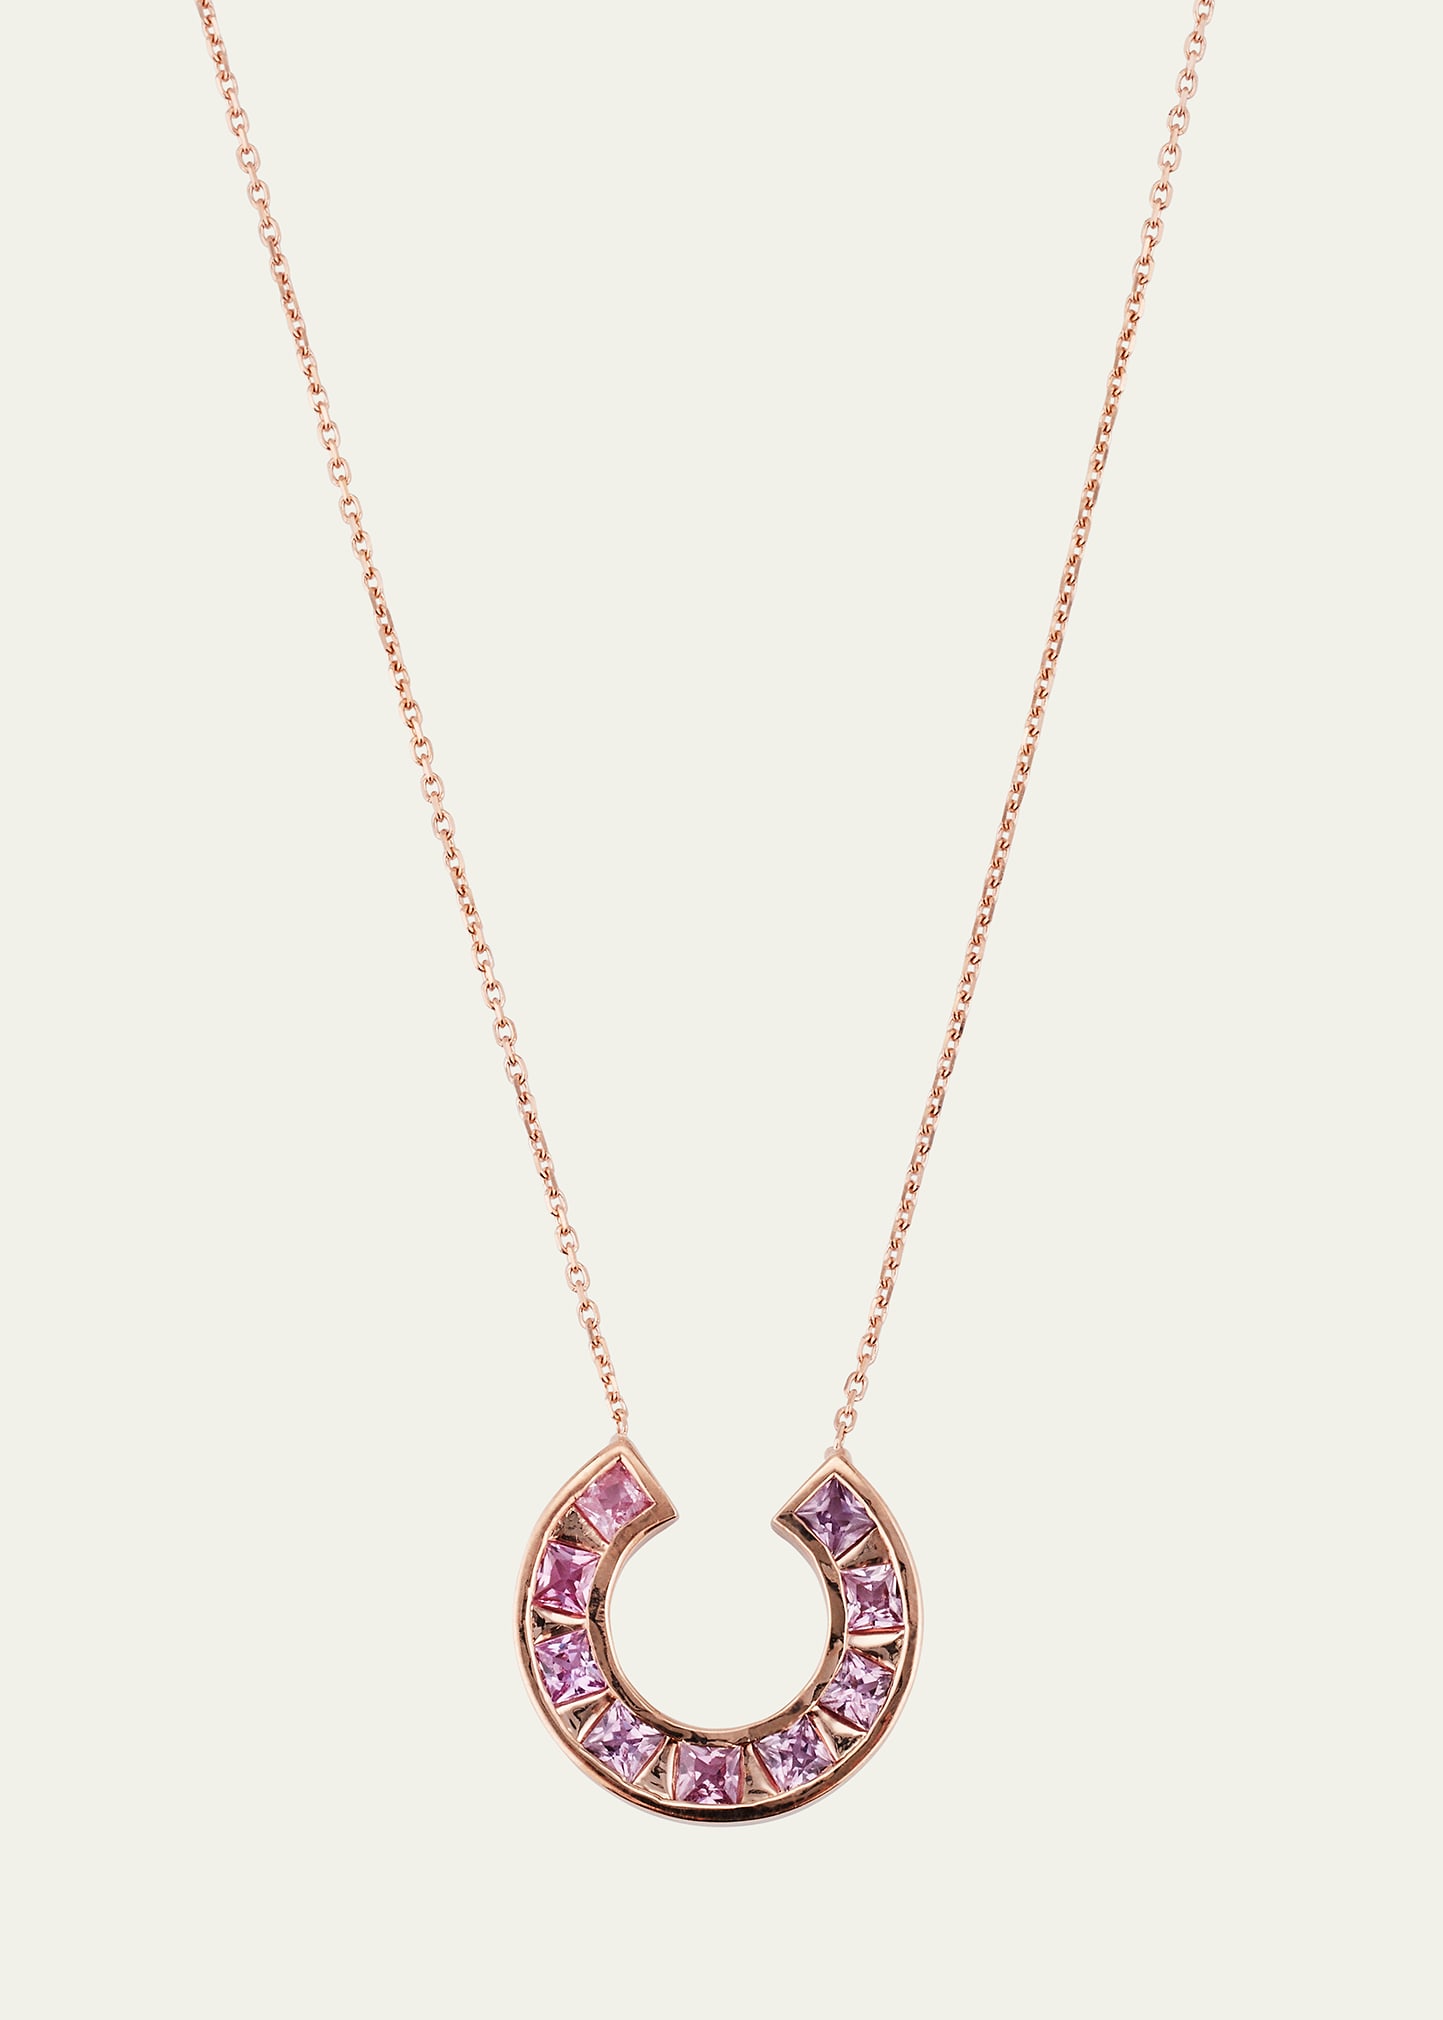 14k Rose Gold Sundial Pink Sapphire Pendant Necklace